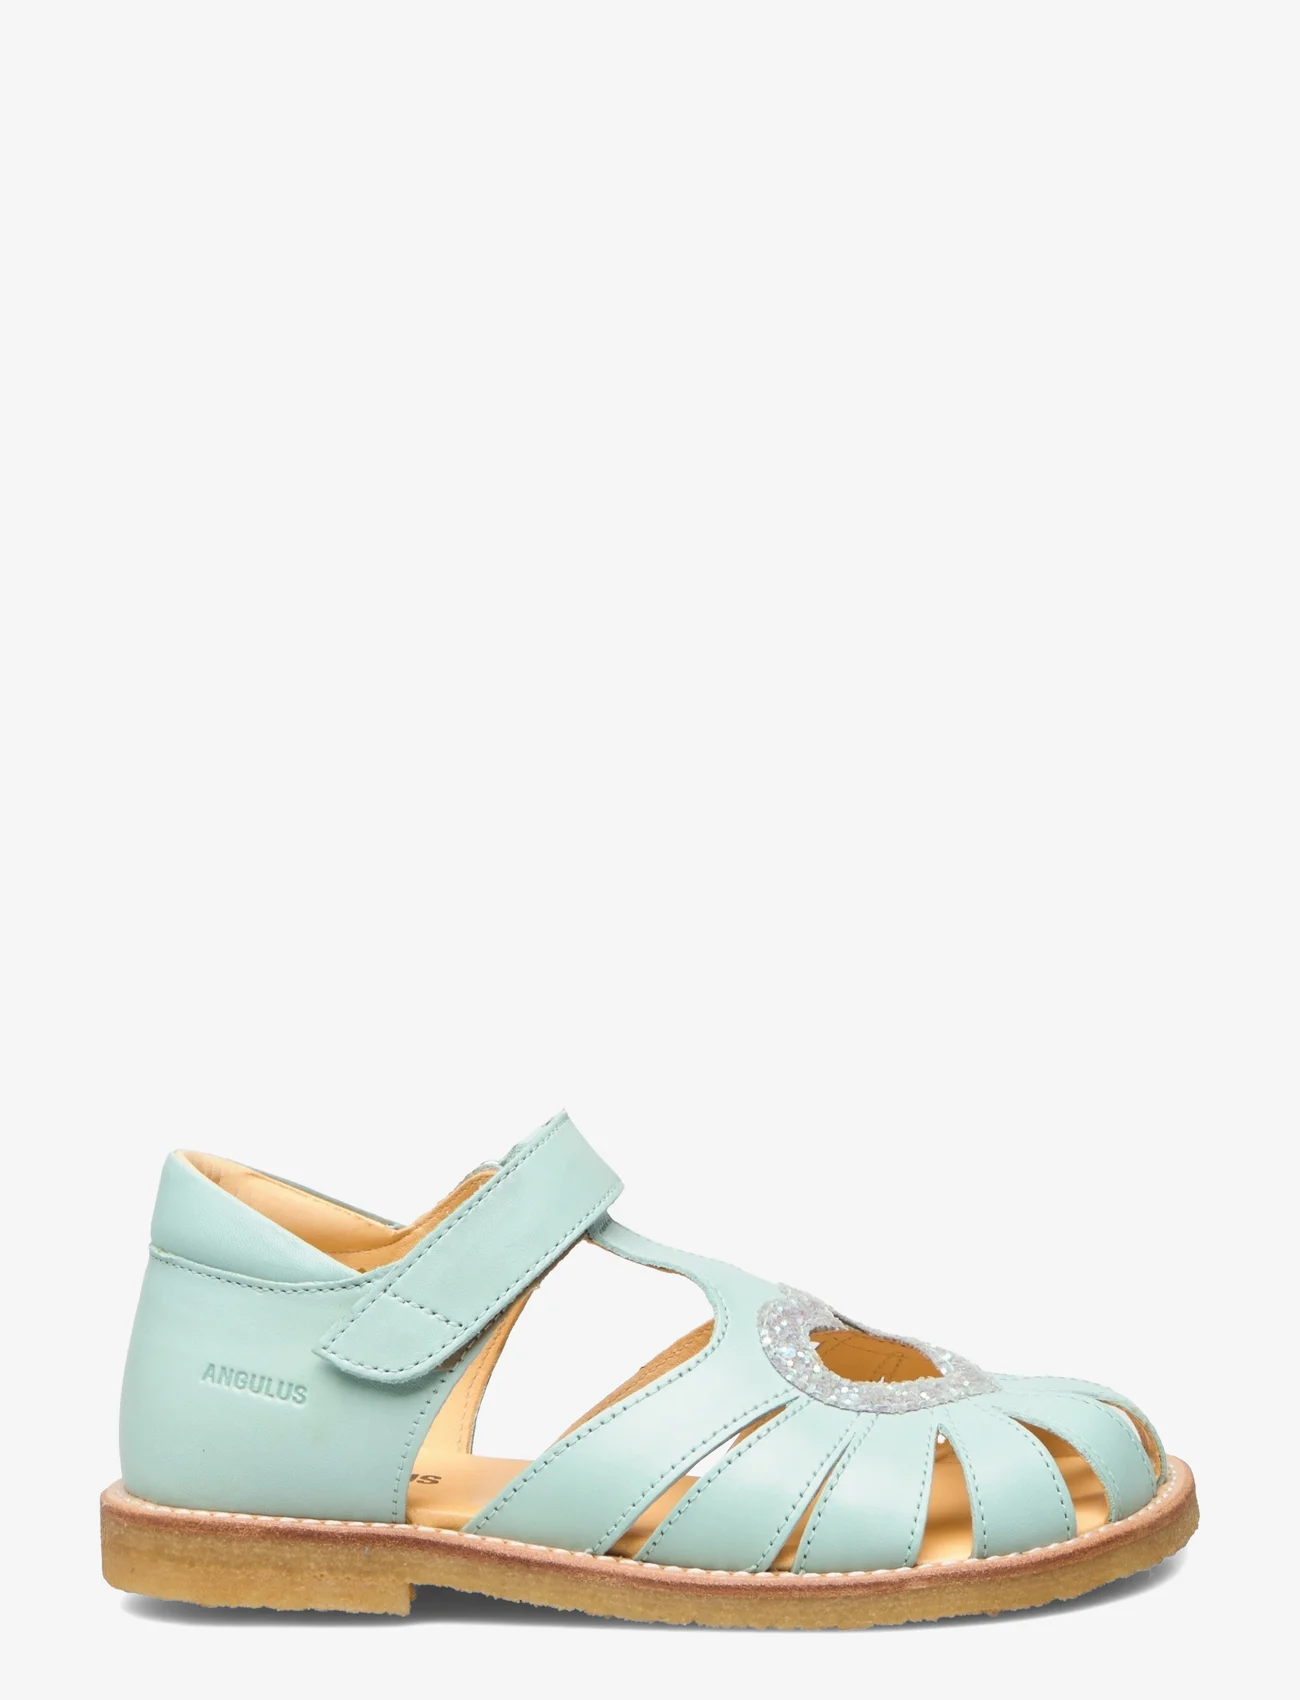 ANGULUS - Sandals - flat - closed toe - - summer savings - 1583/2697 mint/mint glitter - 1